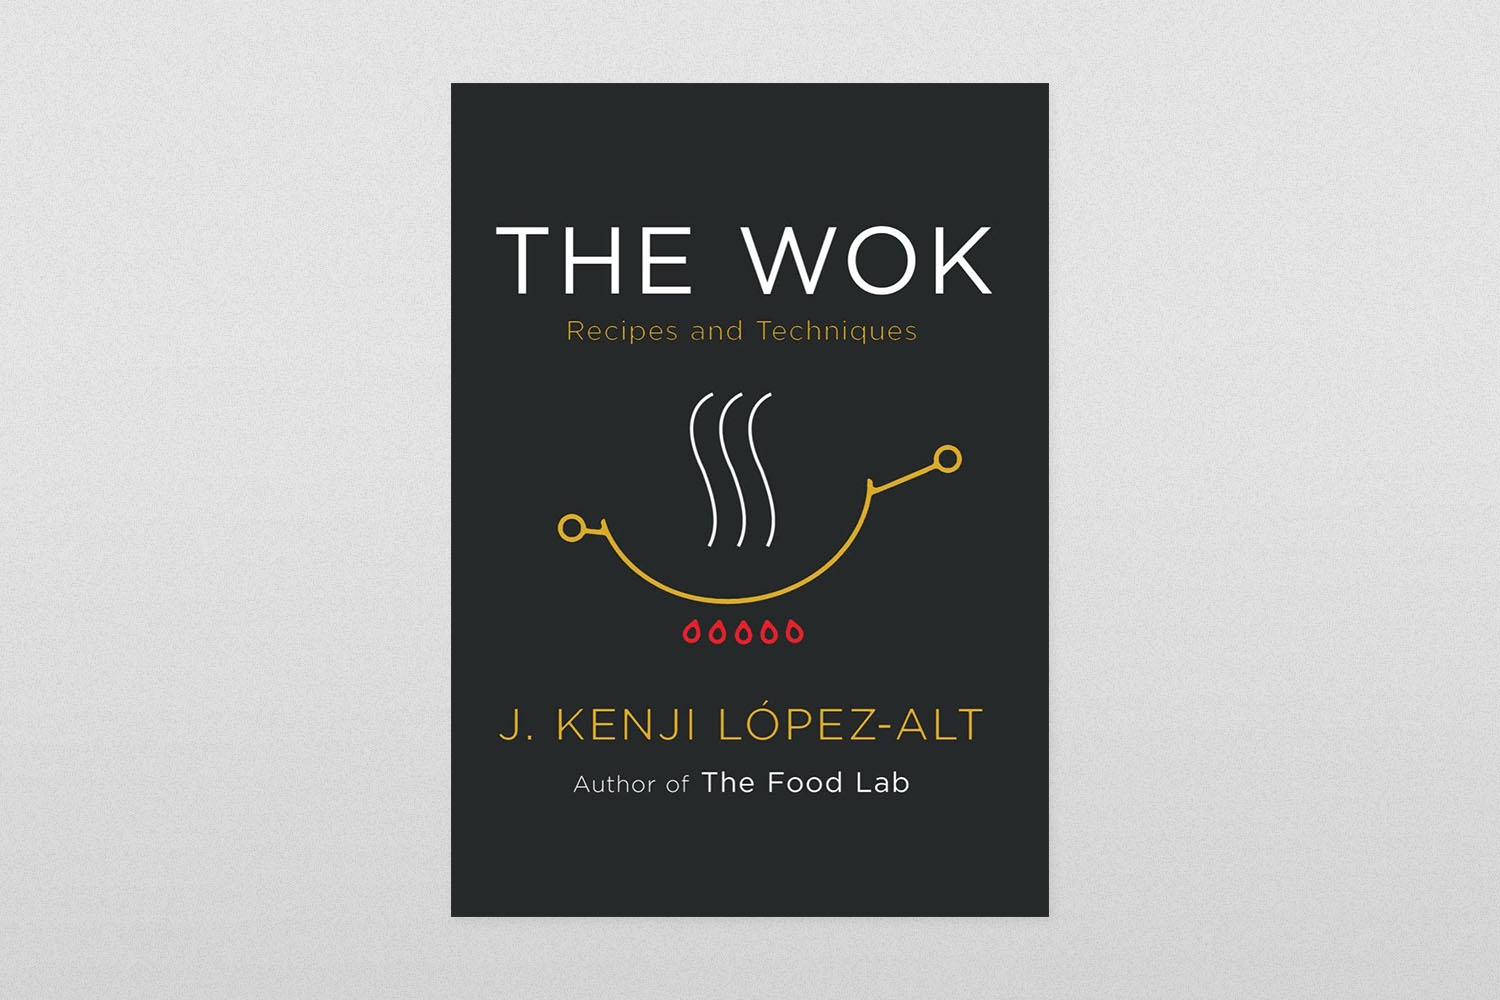 "The Wok"